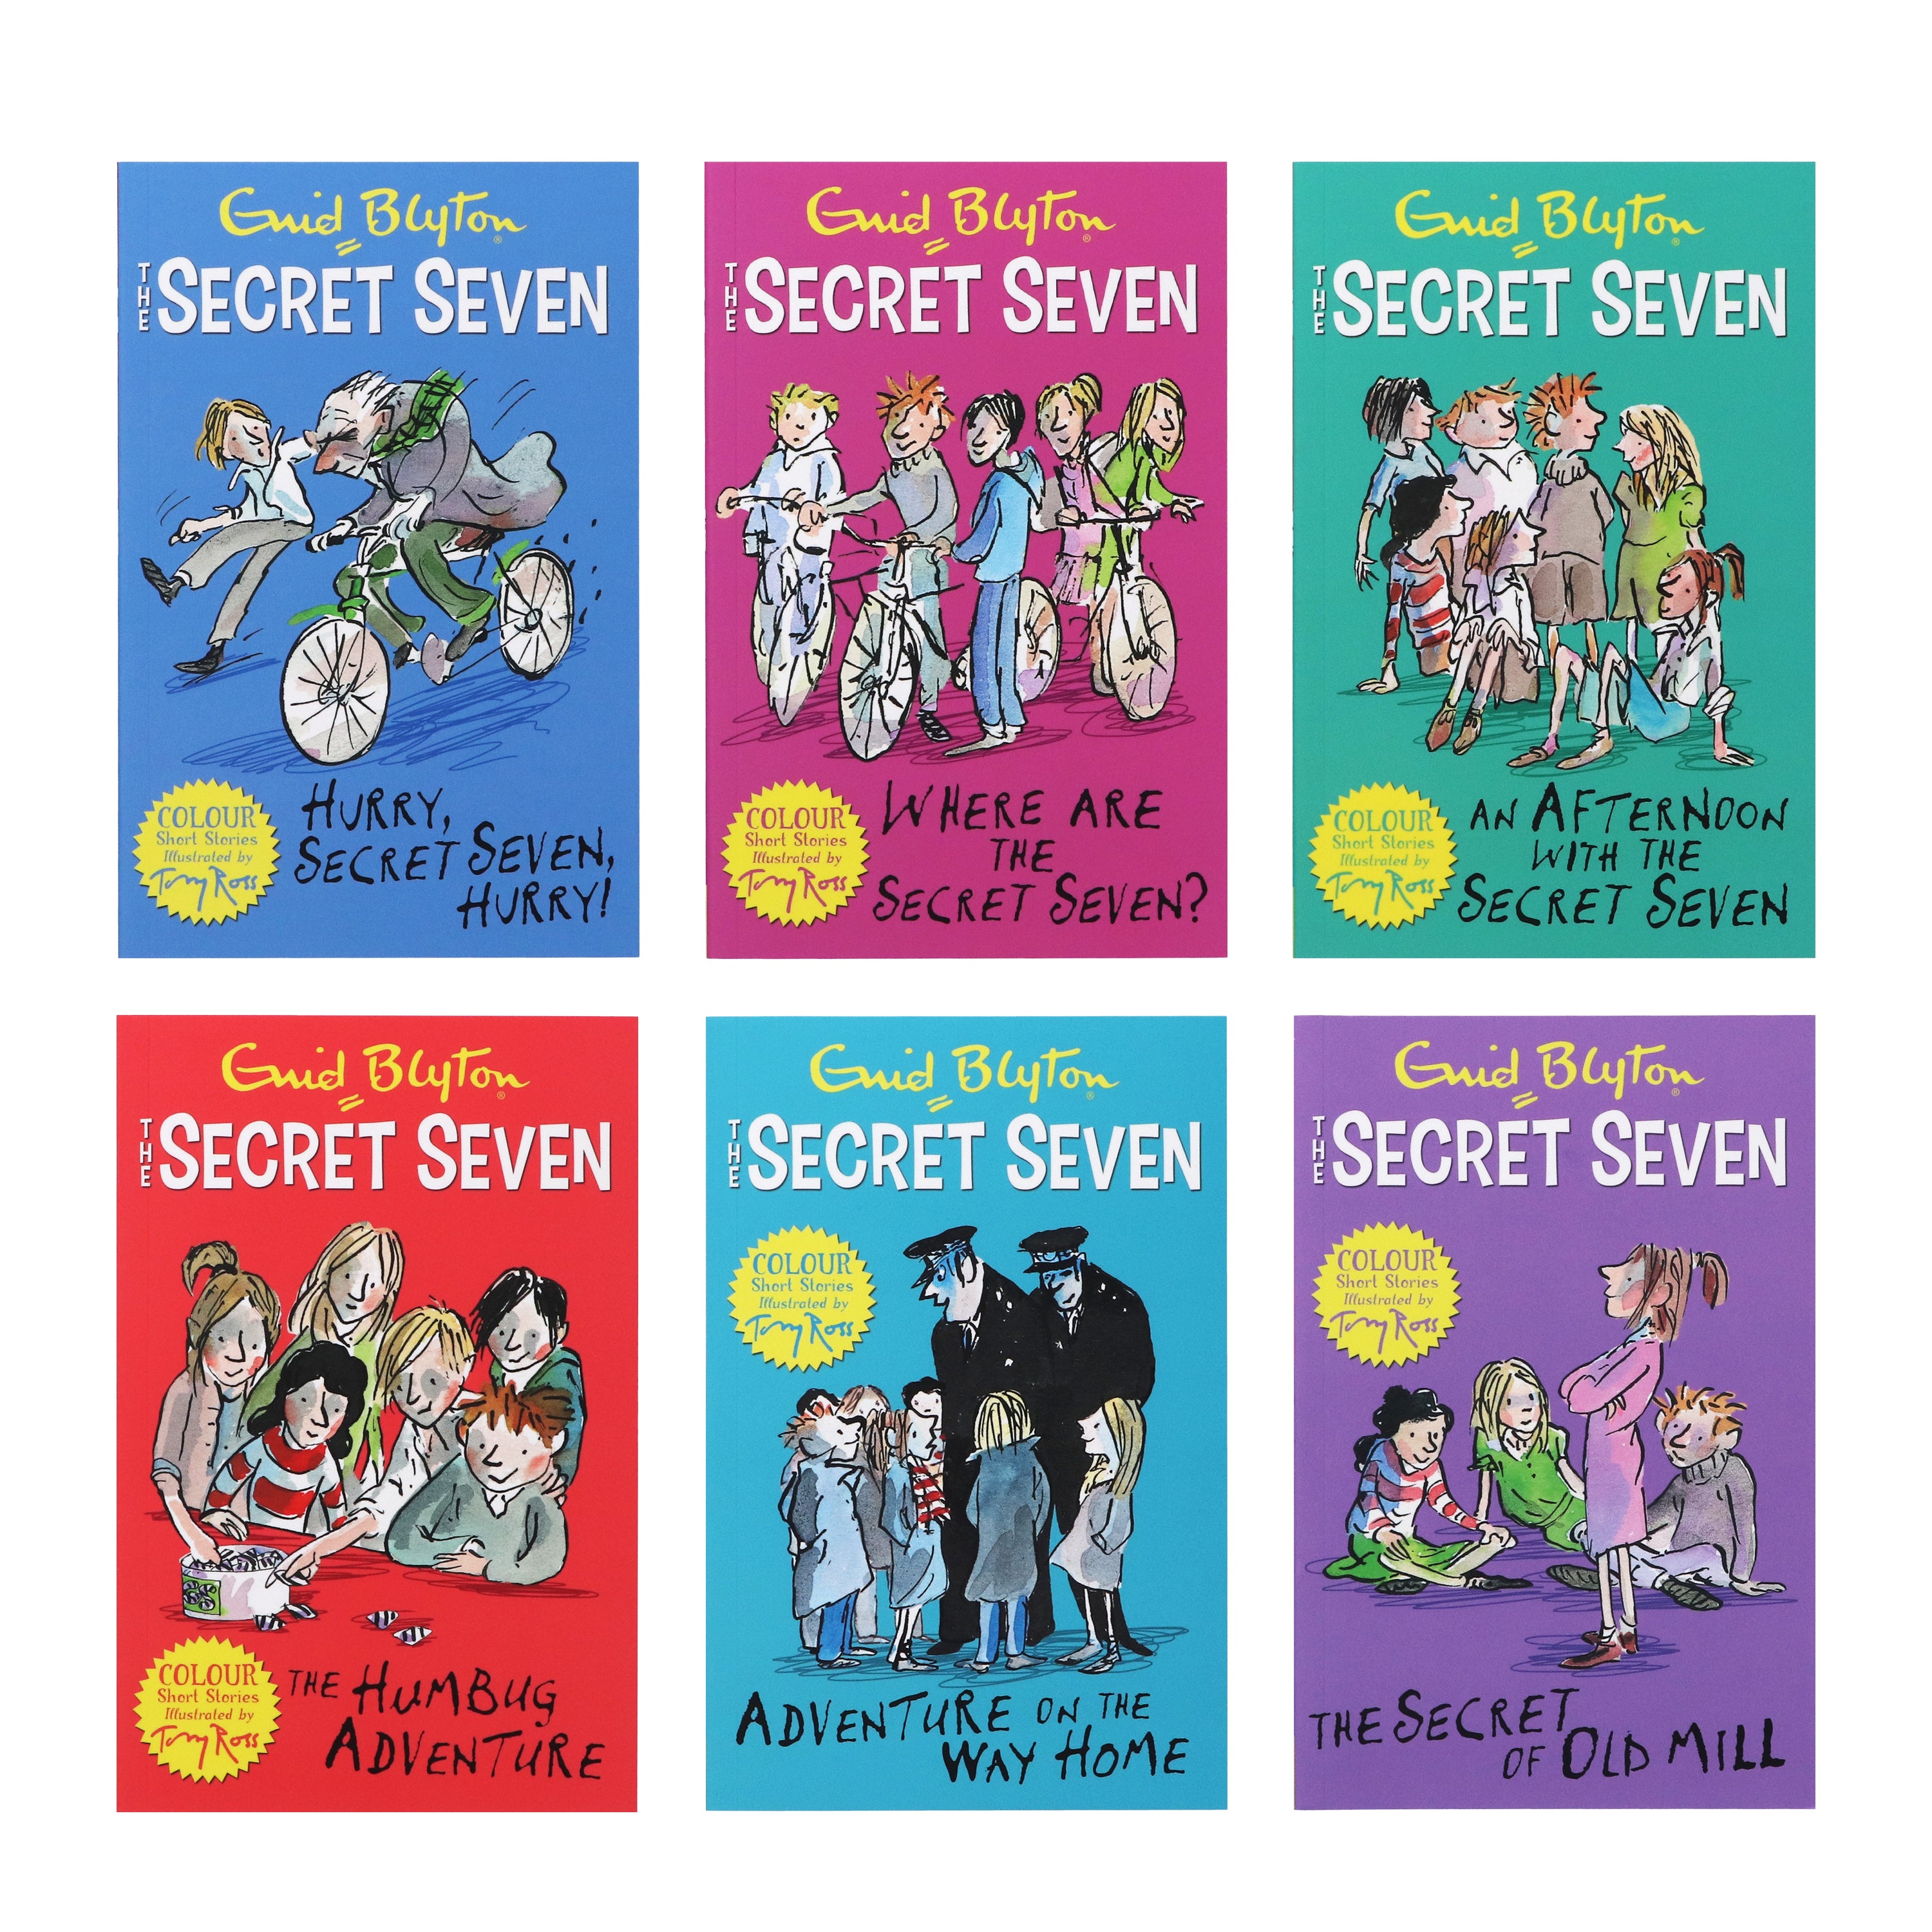 The Secret Seven Short Story Collection 6 Books Box Set By Enid Blyton - Ages 6-11 - Paperback